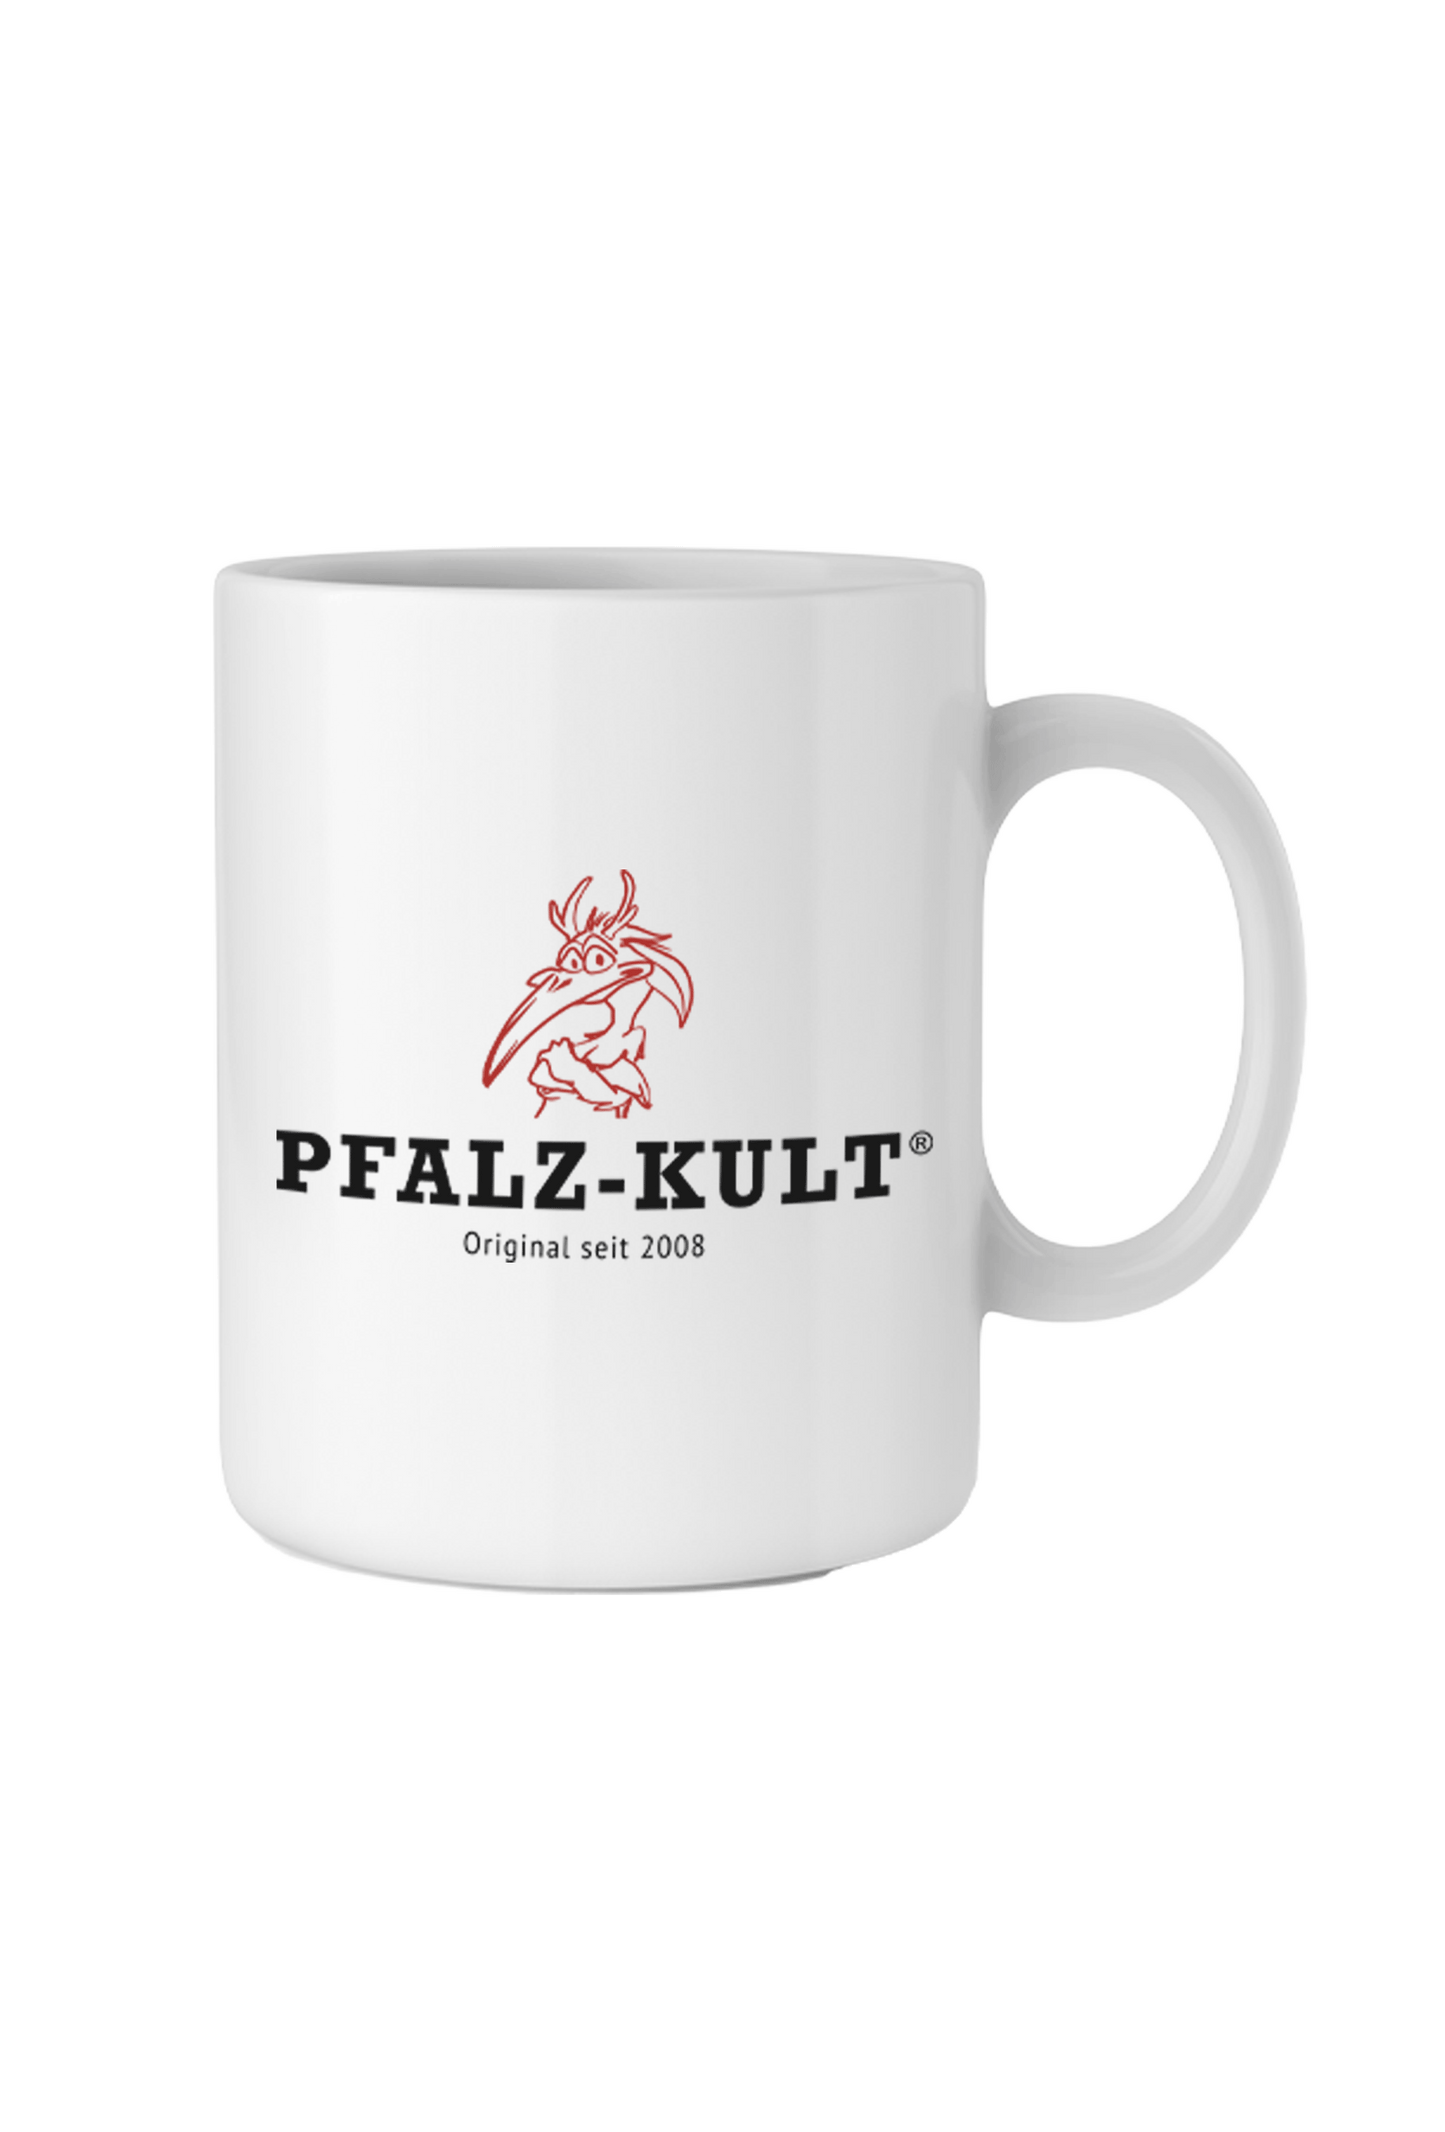 Pfalz-Kult Original - Tasse